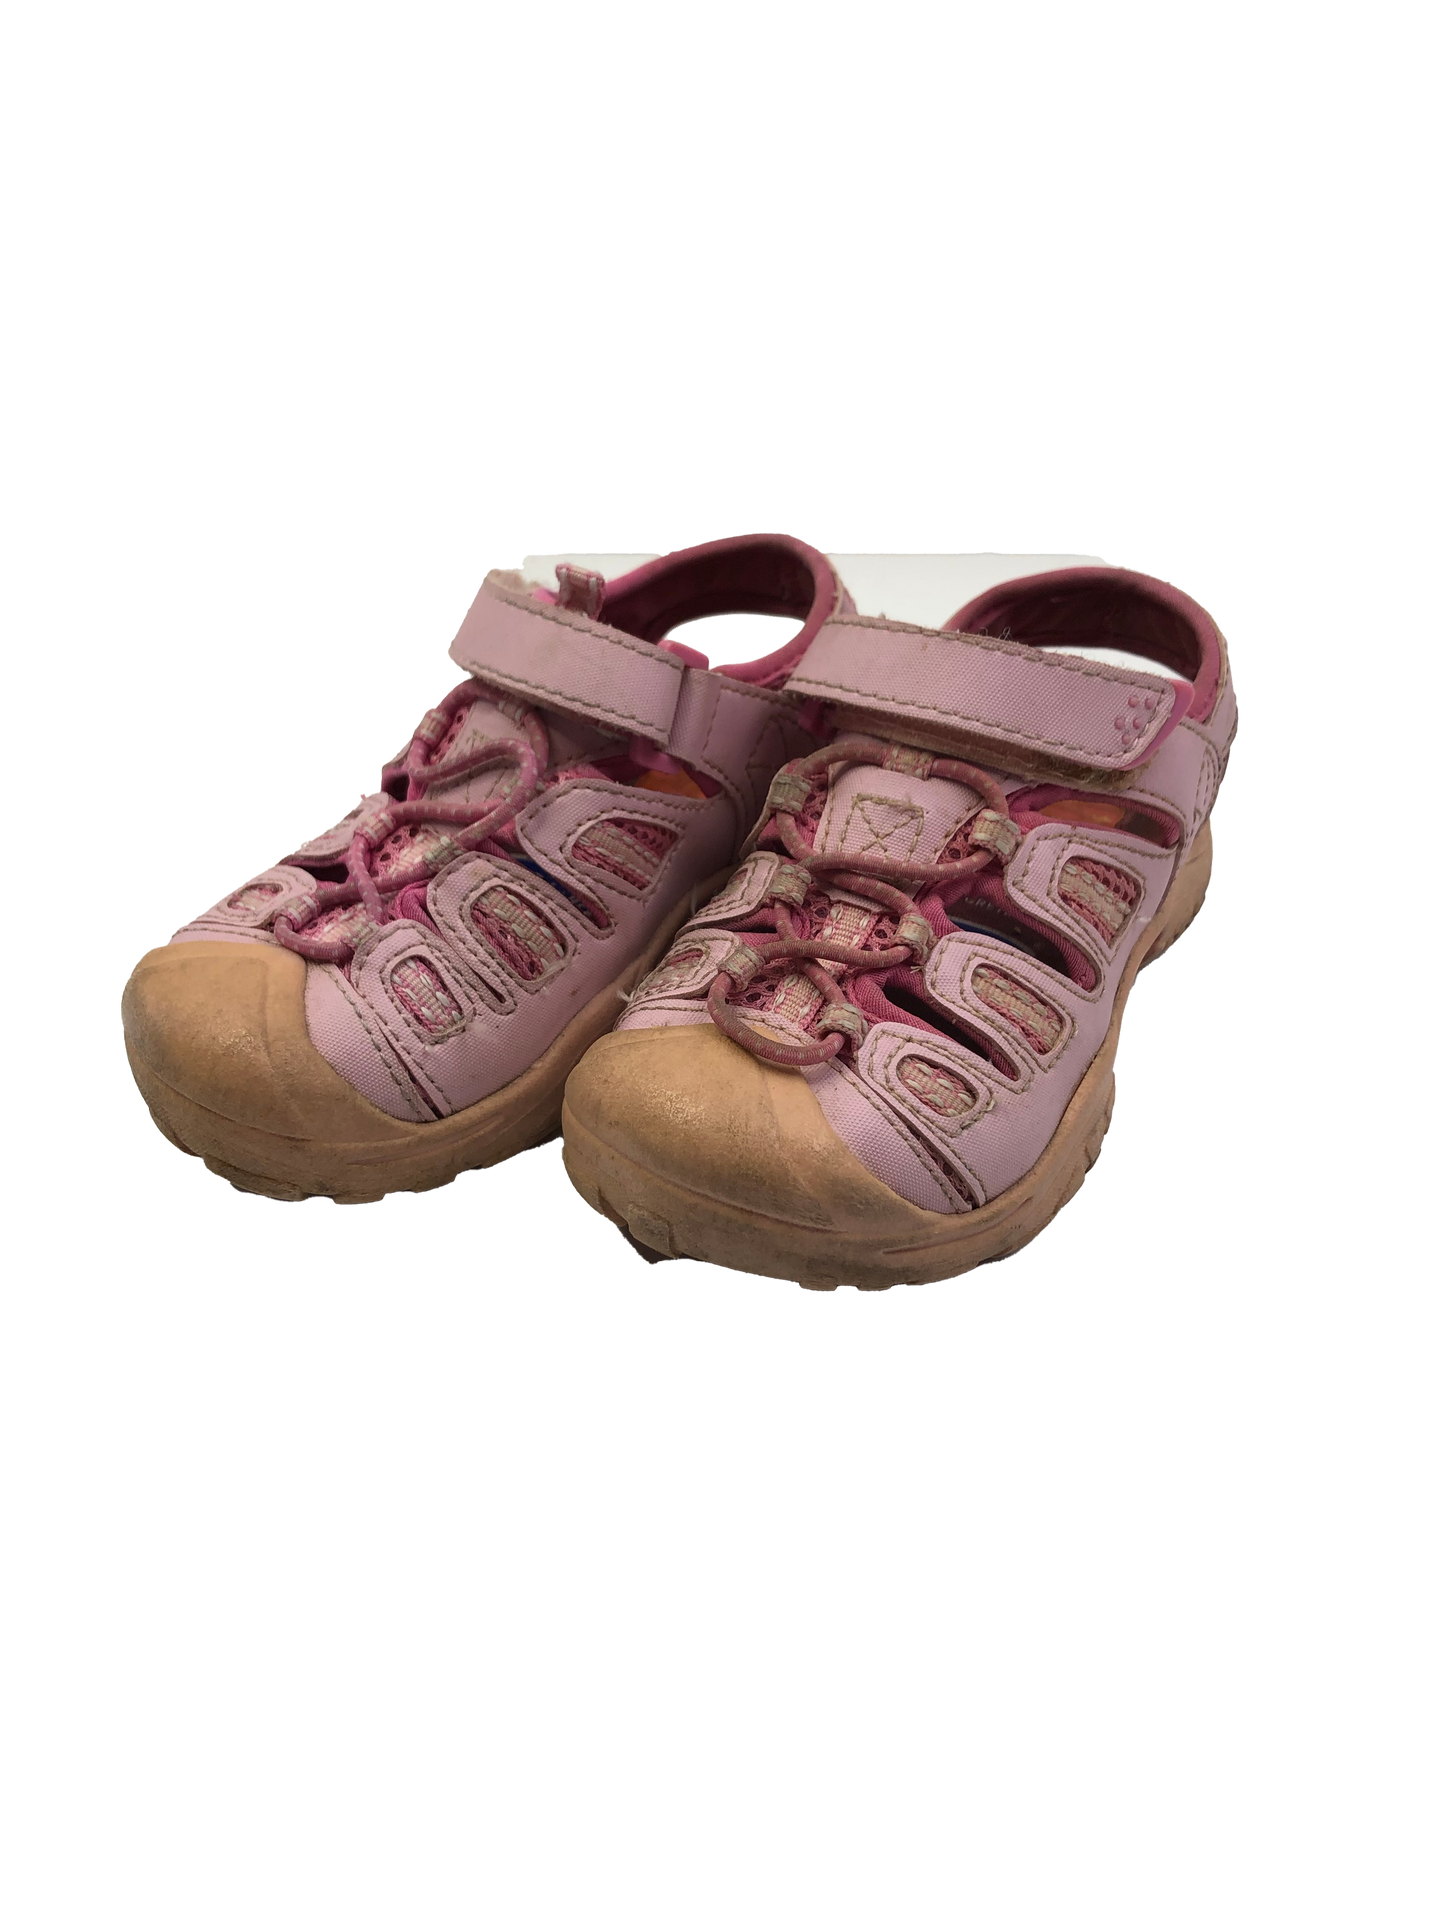 Dr. Scholls Pink Sandals 9